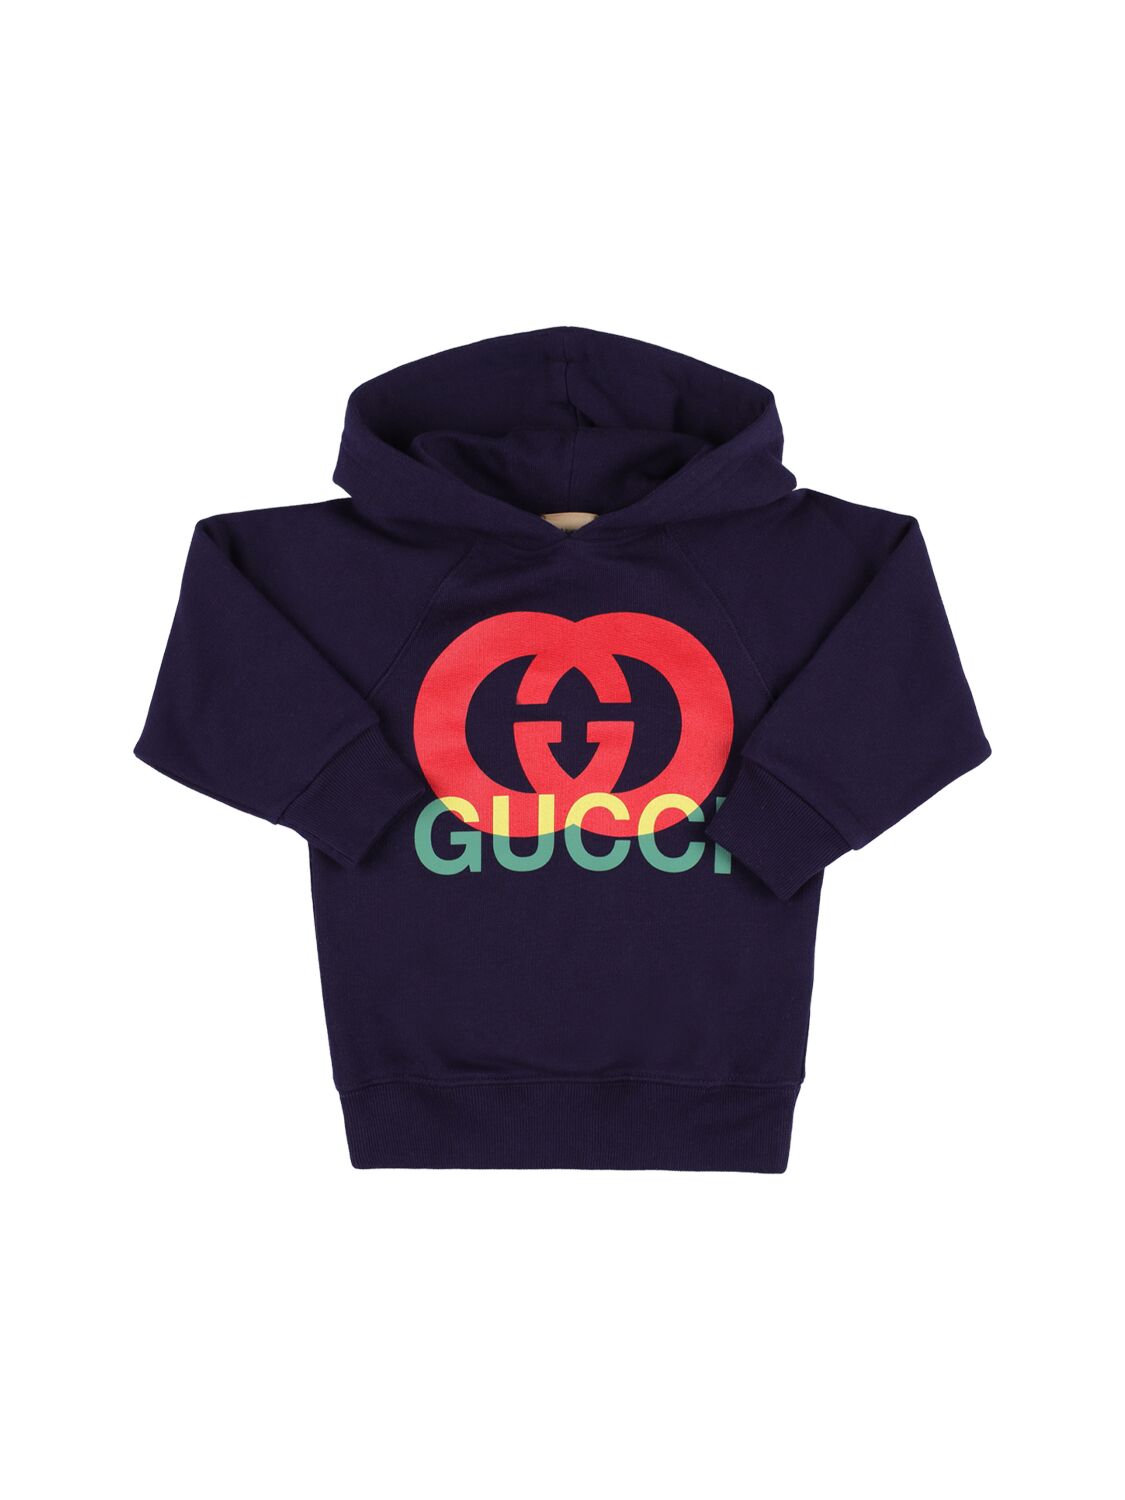 Nwt Gucci hoodie Kids size 6 Punk print punker